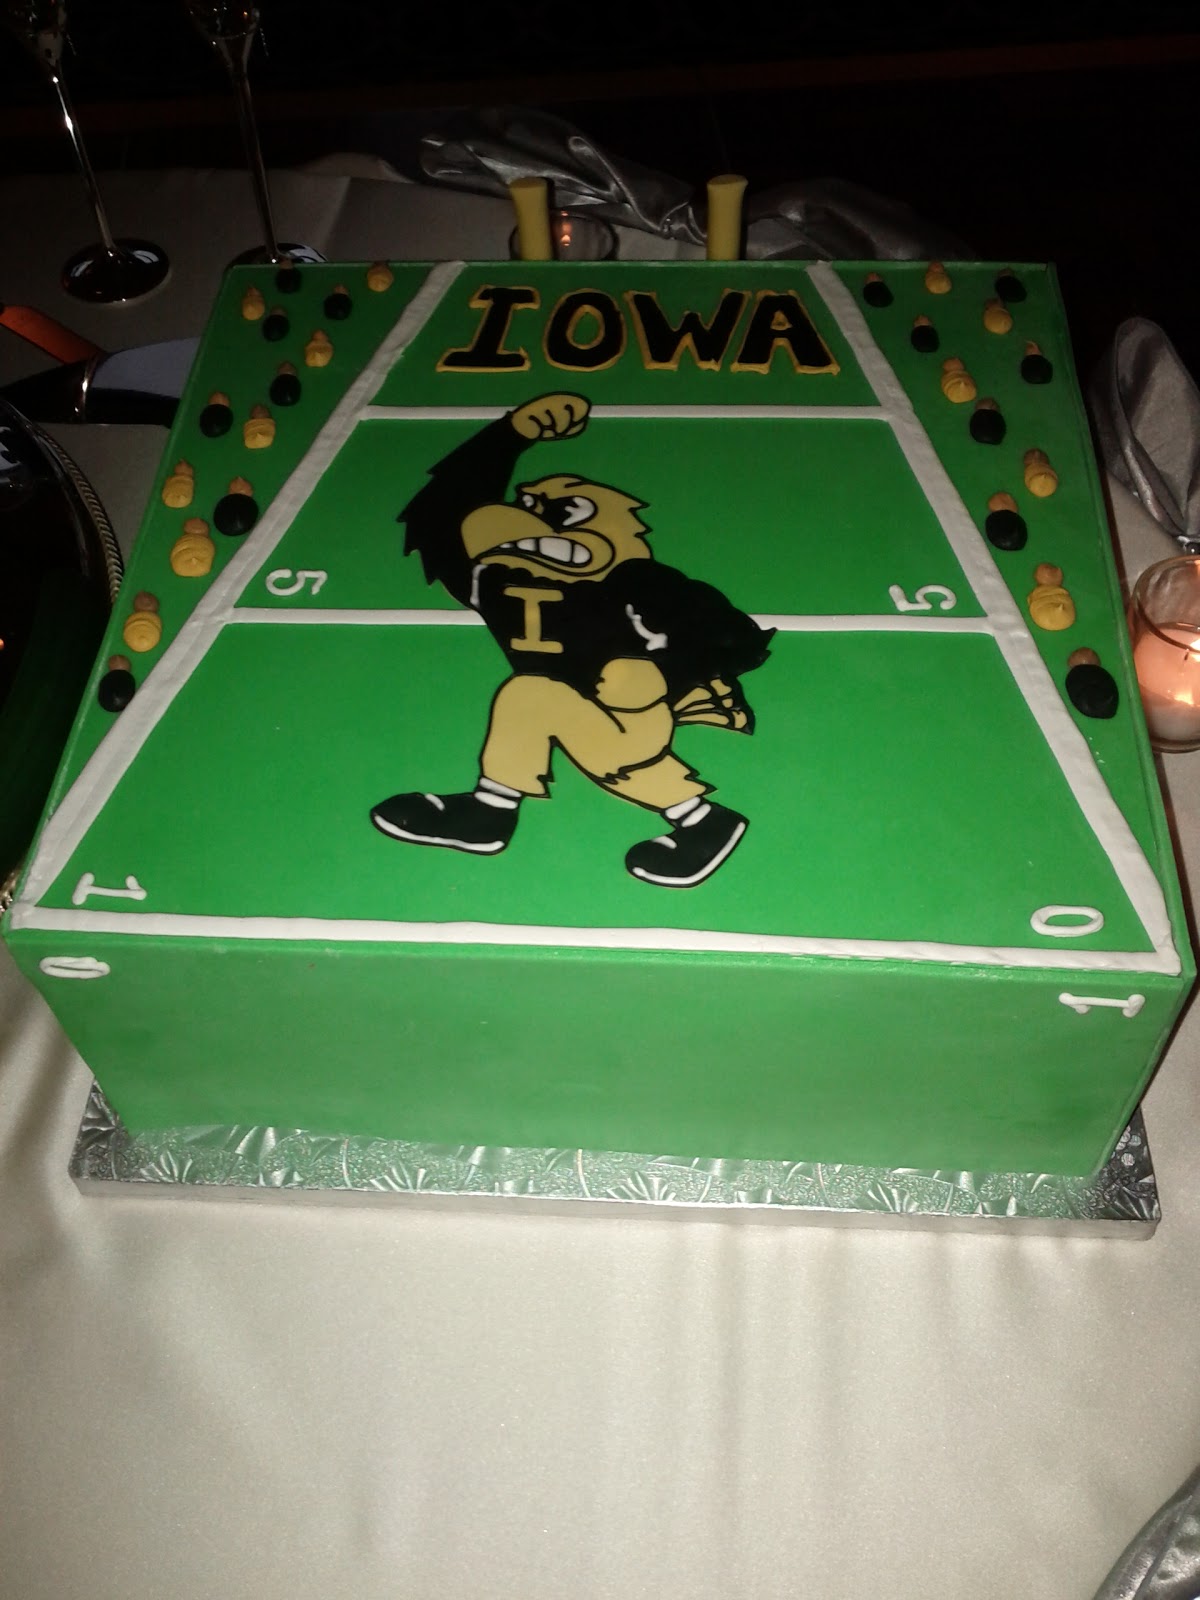 Iowa Hawkeye Birthday Cake